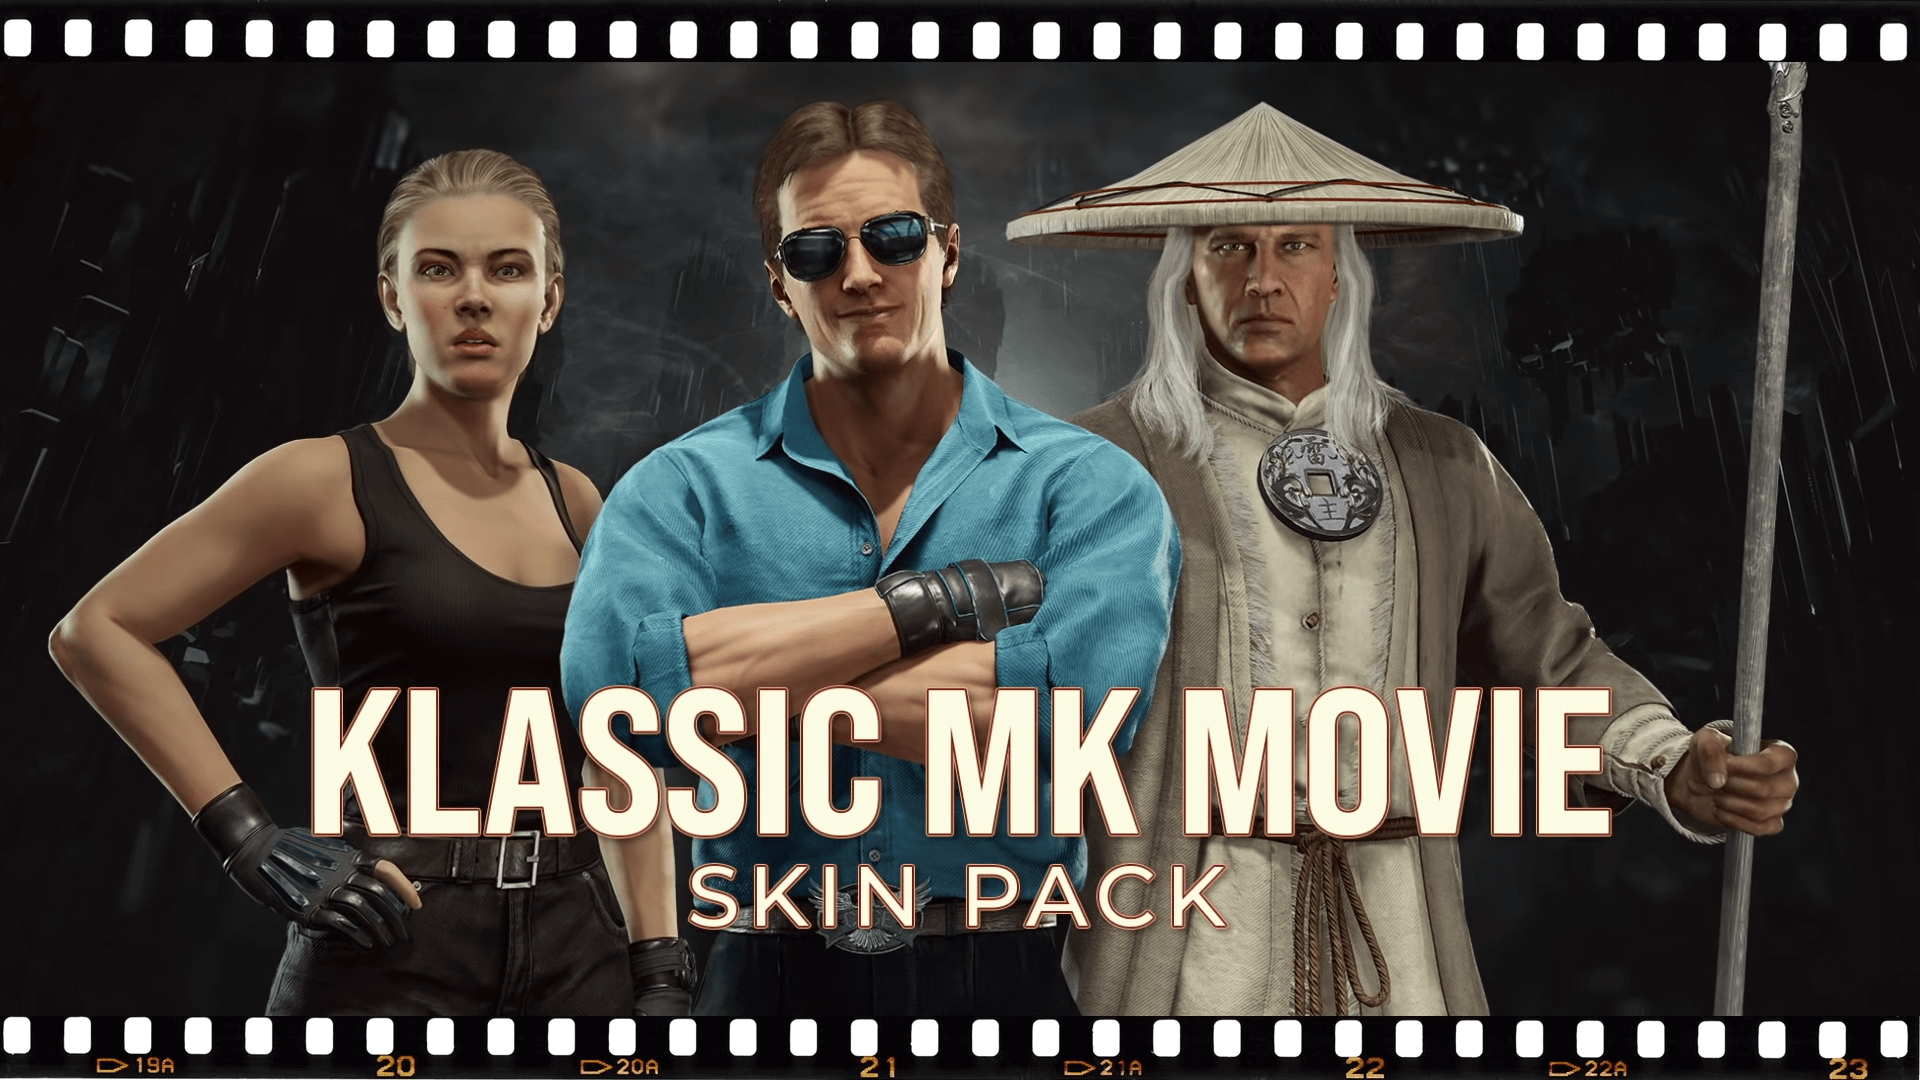 New Klassic Skins coming to MK11 Movie Sonya, Cage, and Raiden!